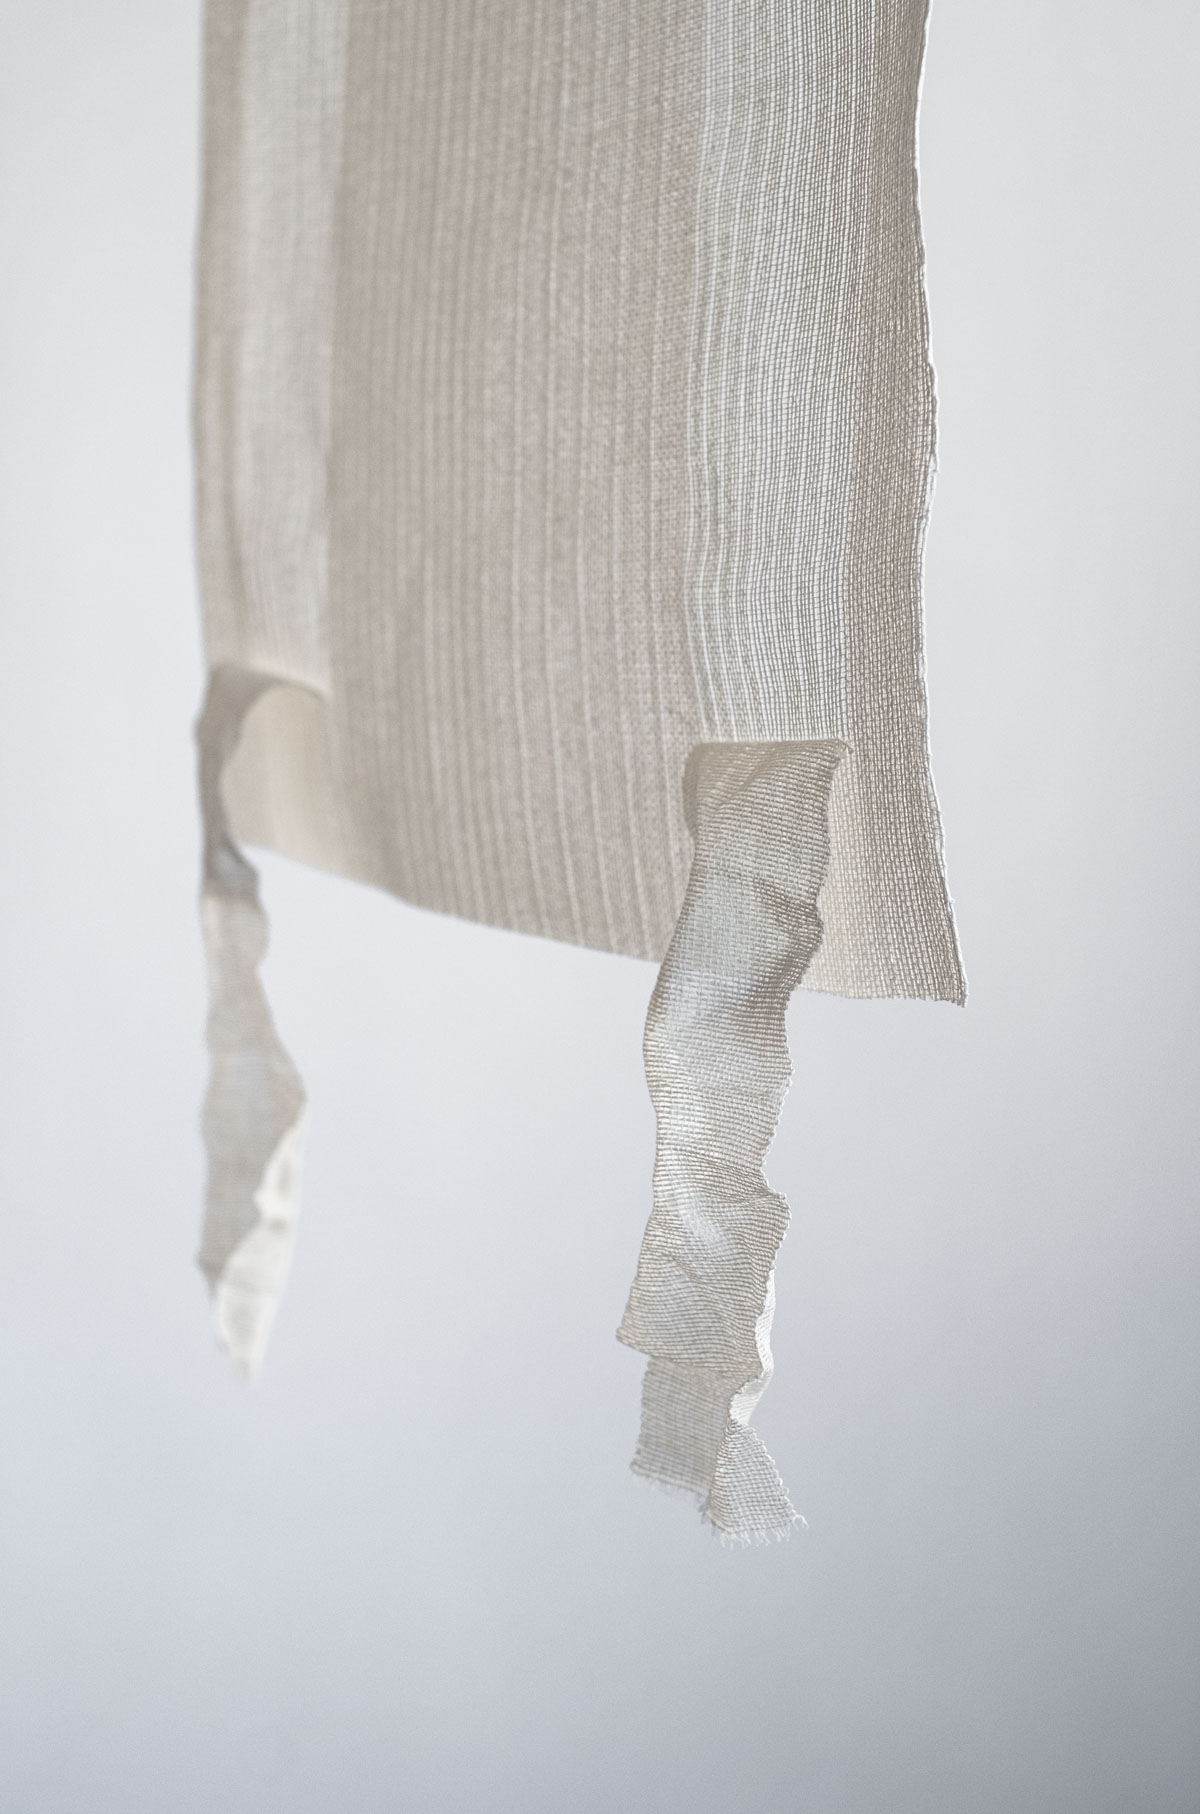 Ceretta All’Ordito (2021) 42,5x29x1 cm Japanese paper yarn